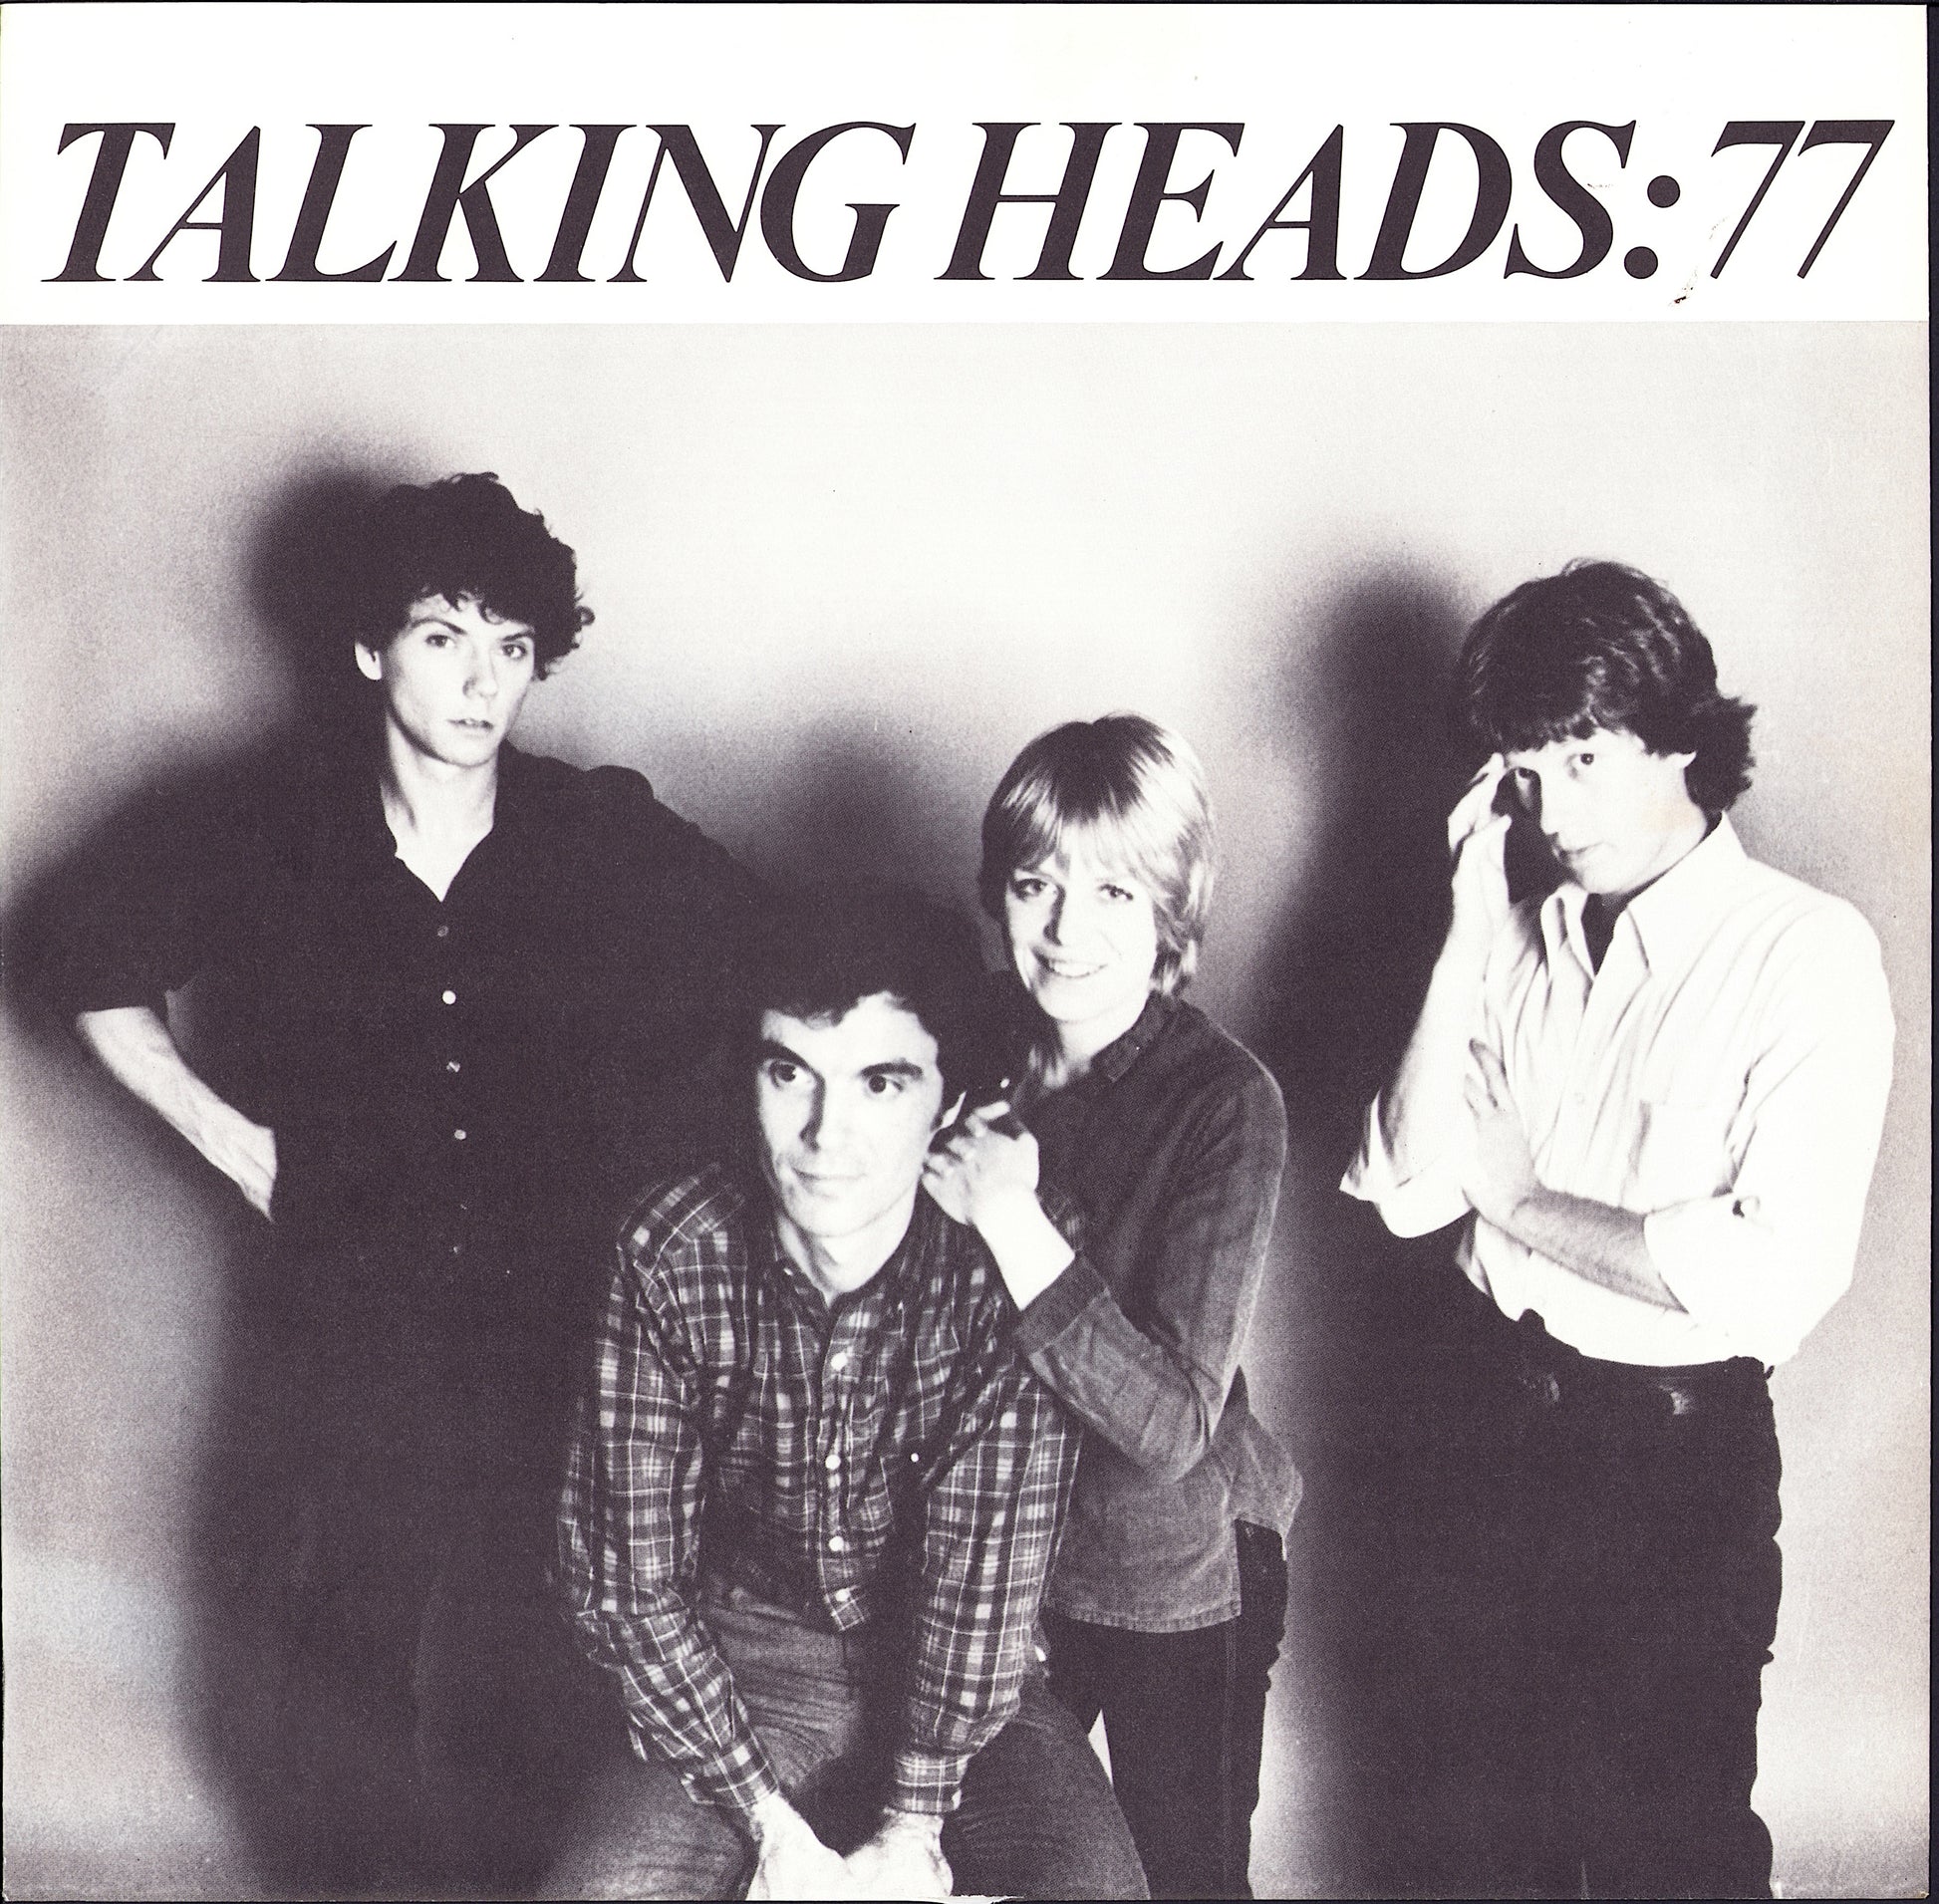 Talking Heads - Talking Heads: 77 Vinyl LP